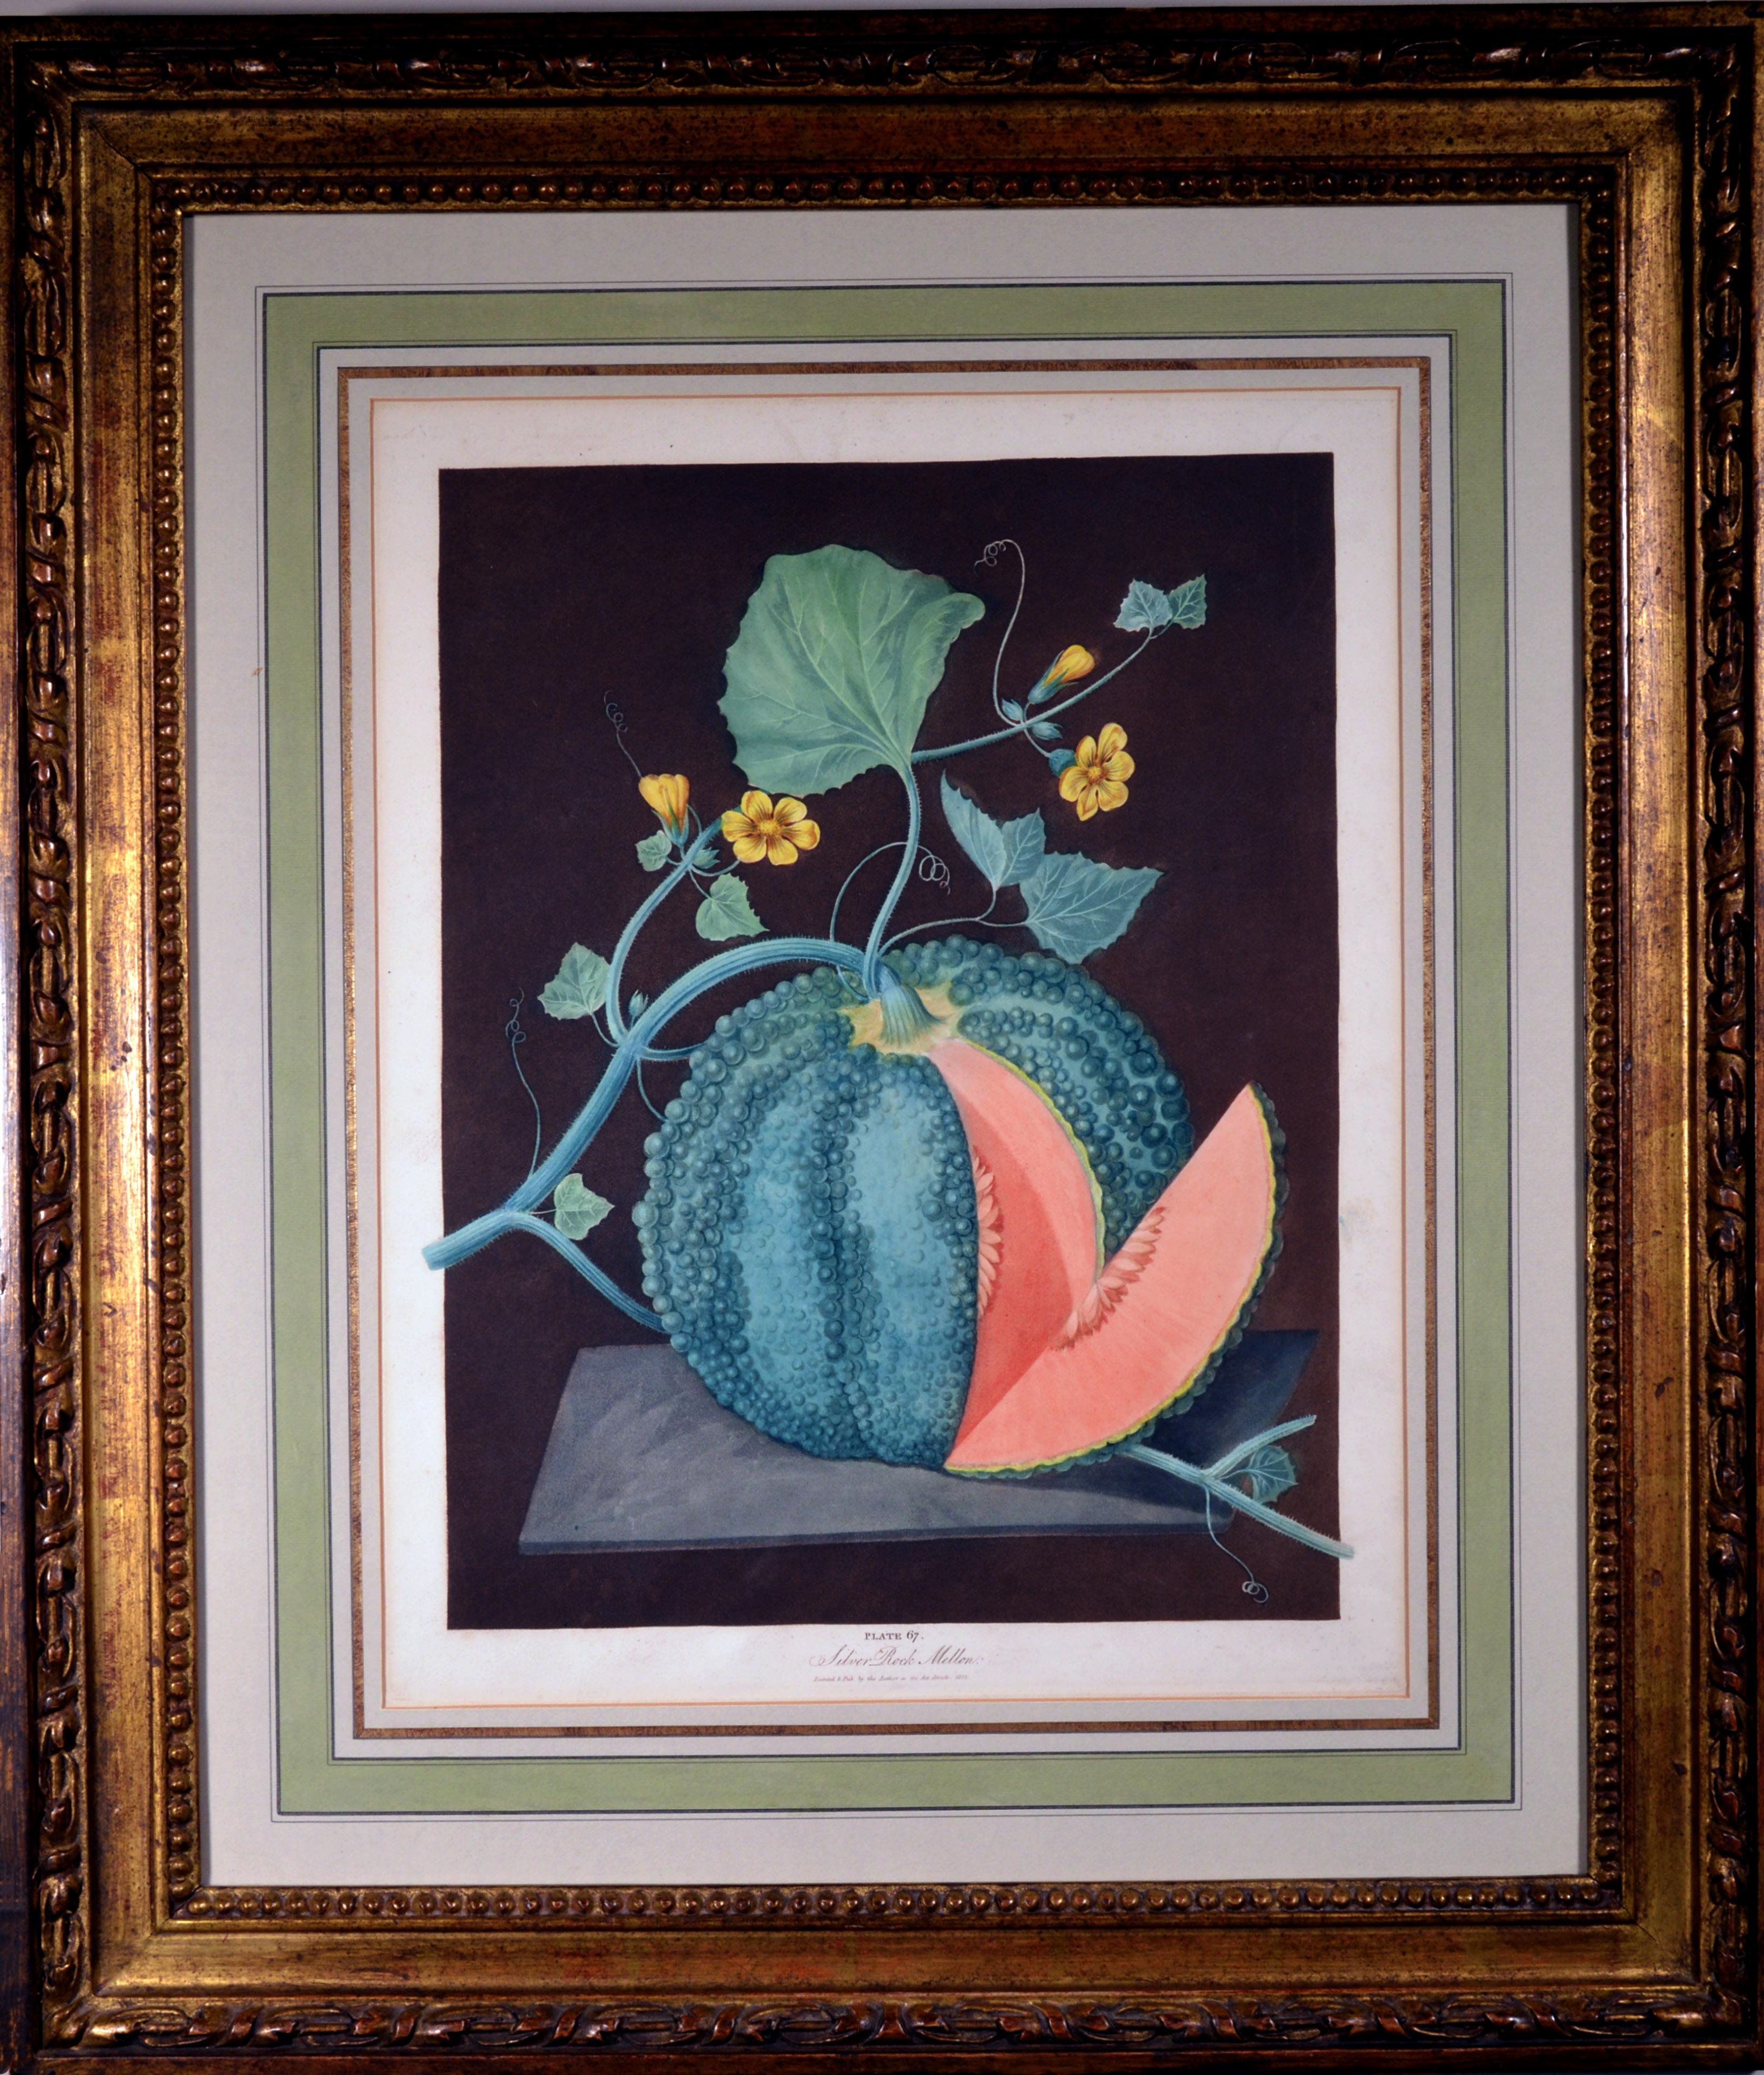 Regency George Brookshaw Pair of Engravings of Melons, Plates 66 and 67